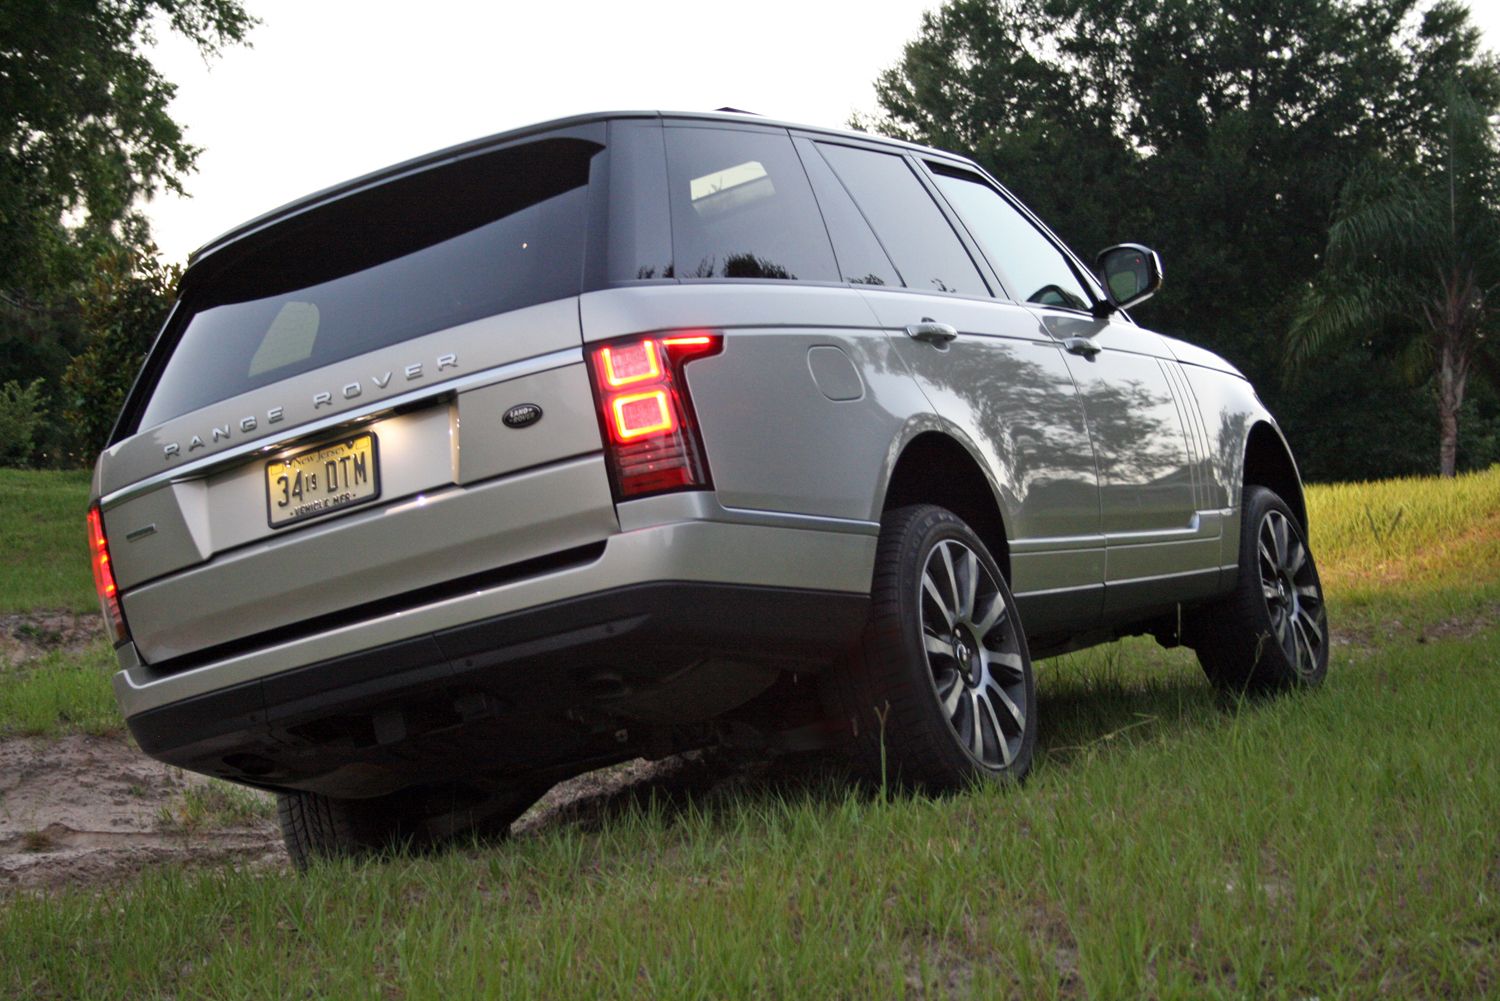 2014 Range Rover Autobiography - Driven